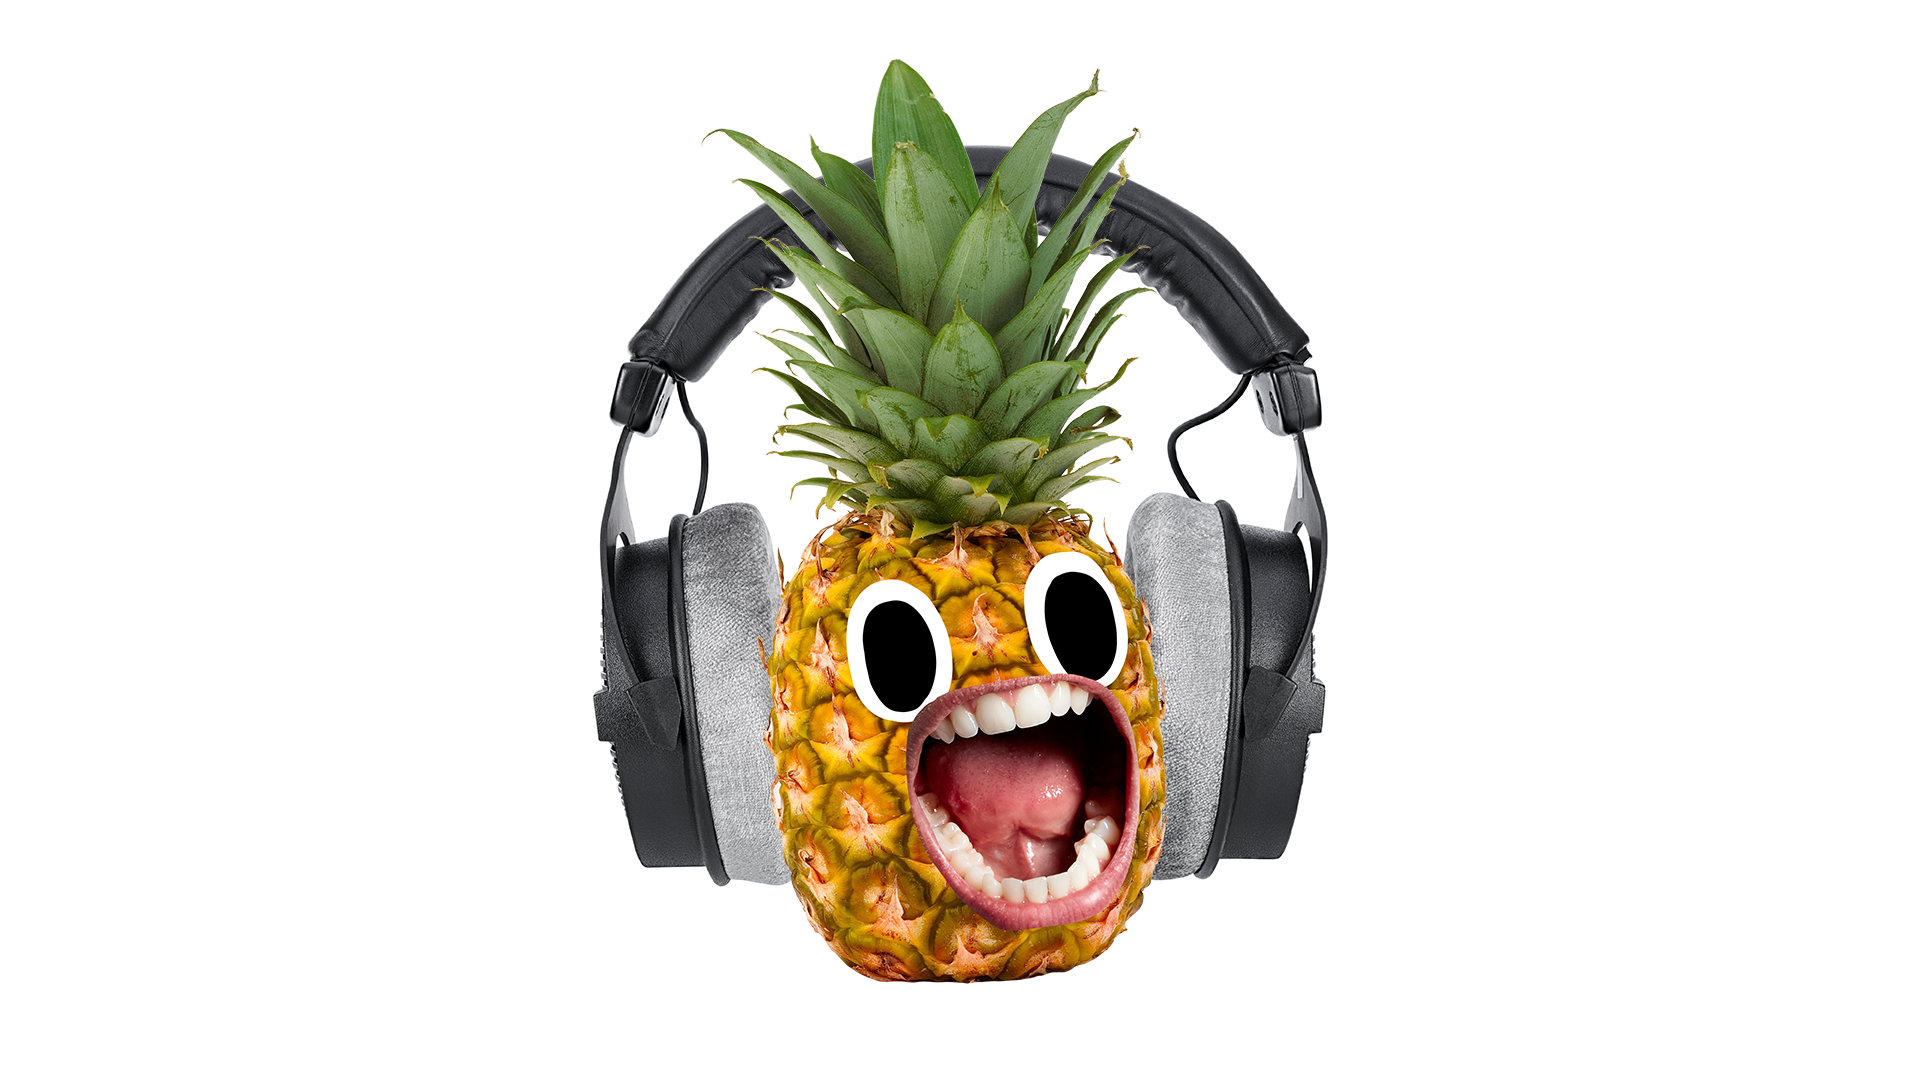 Screaming pineapple with headphones